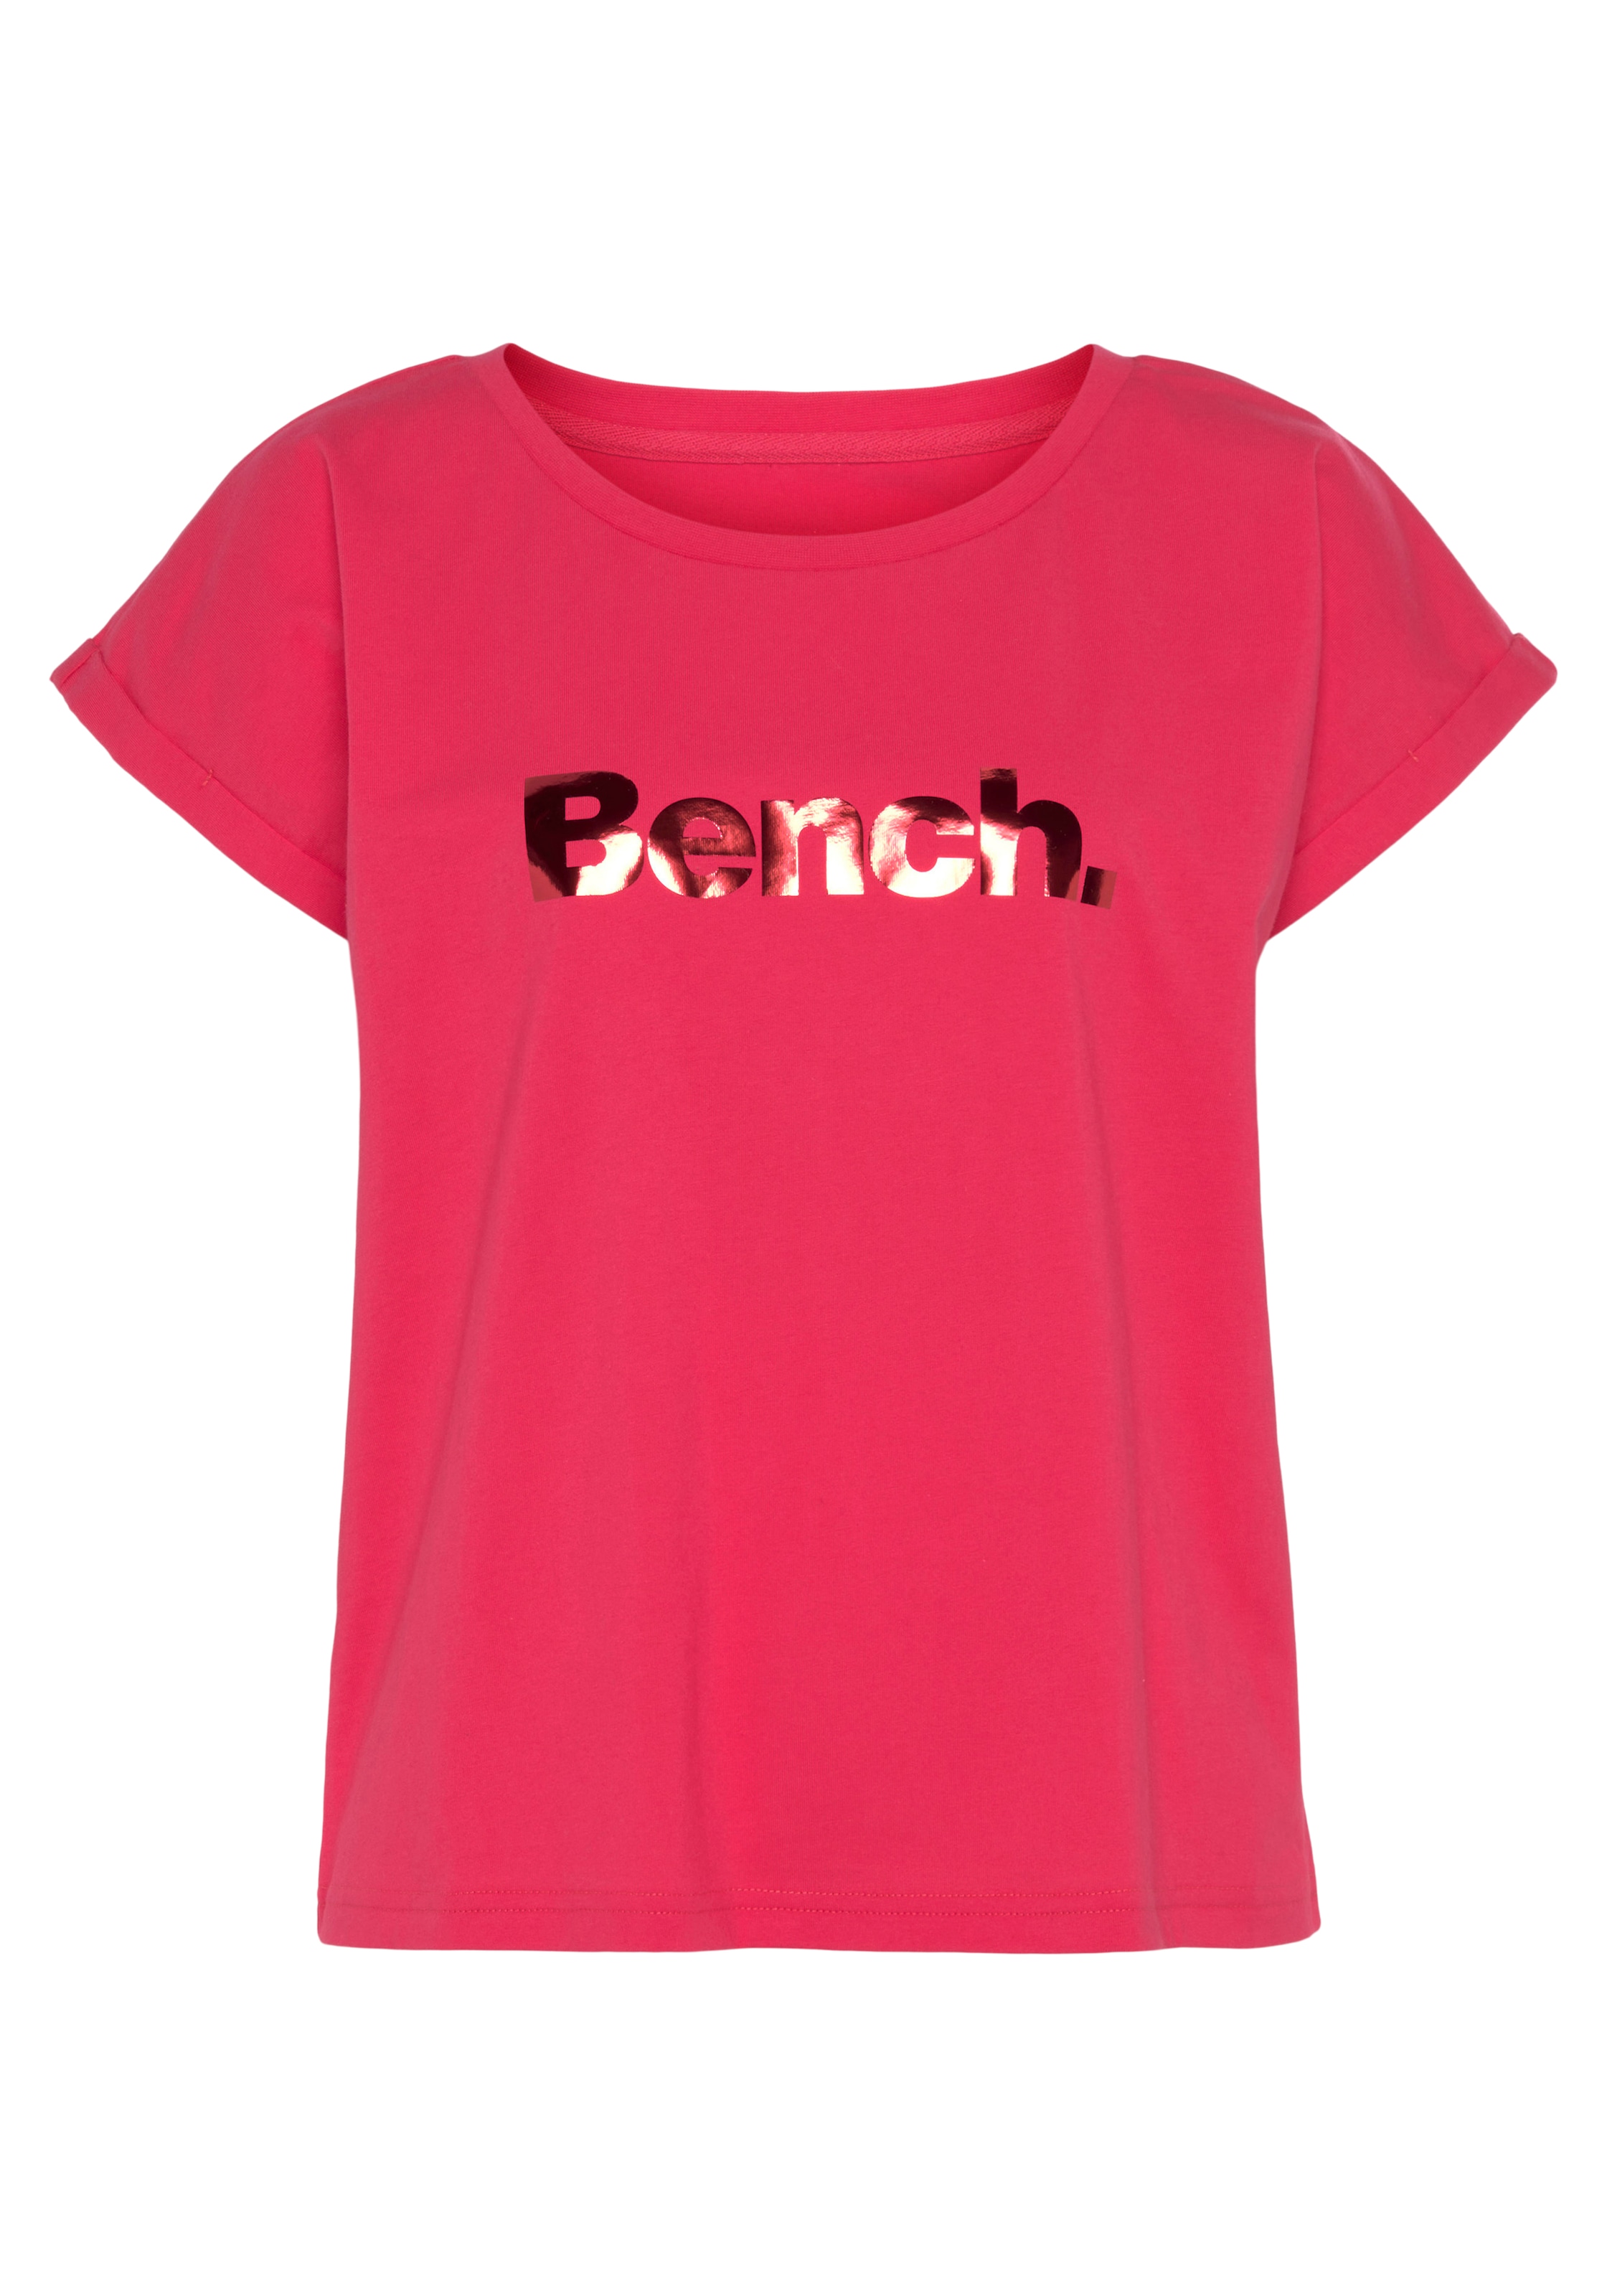 Bench. Loungewear online Schweiz kaufen »-Kurzarmshirt, Loungeshirt«, glänzendem Logodruck, Loungewear T-Shirt Jelmoli-Versand mit bei